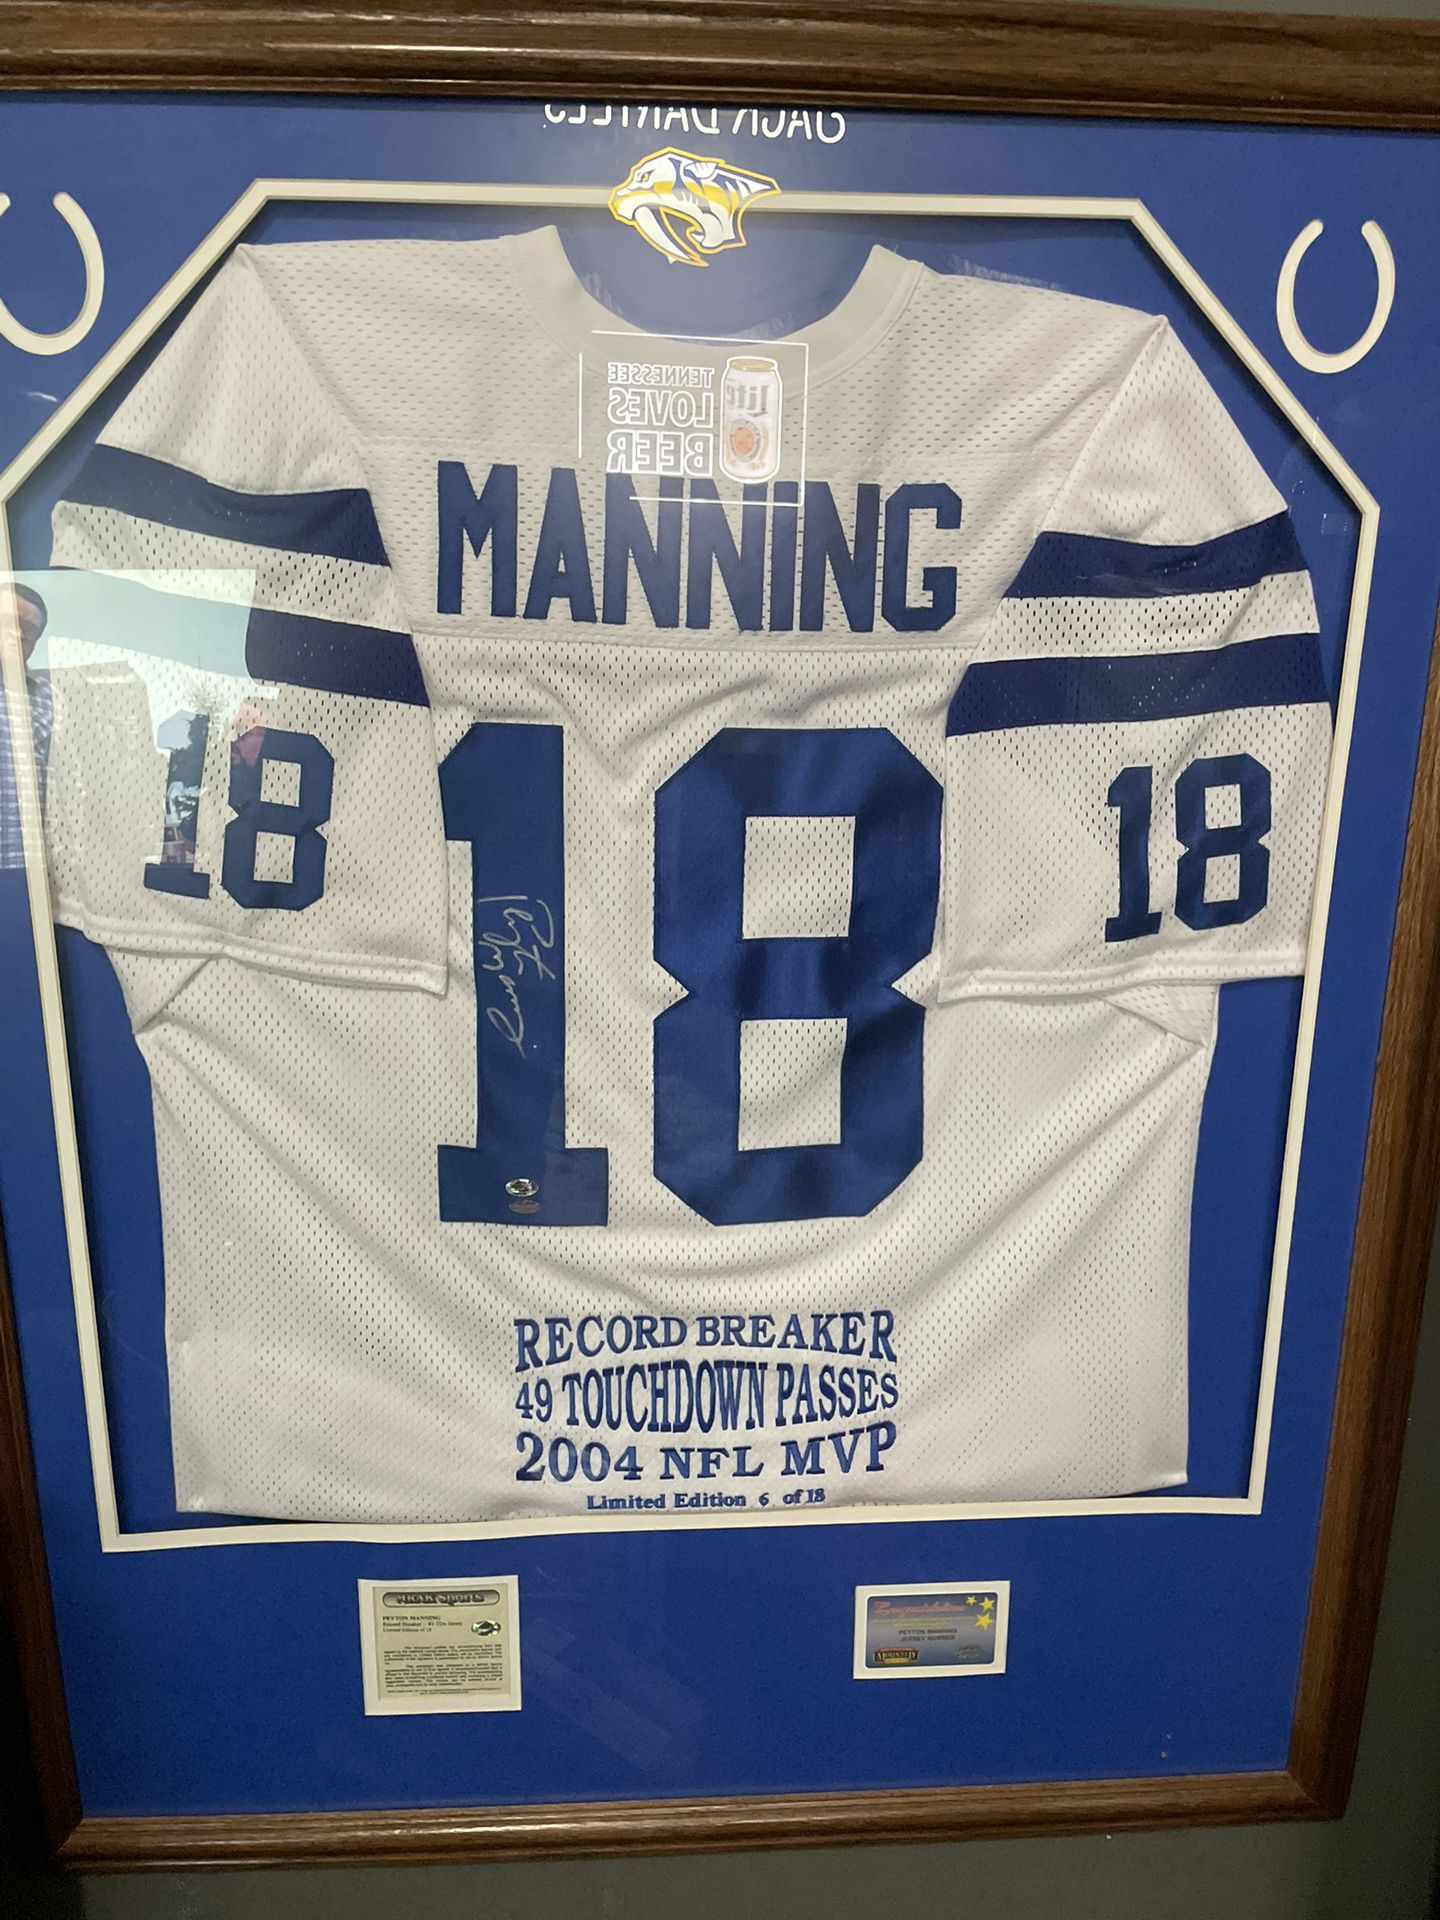 Peyton Manning Autographed Framed Jersey for Sale in Smyrna